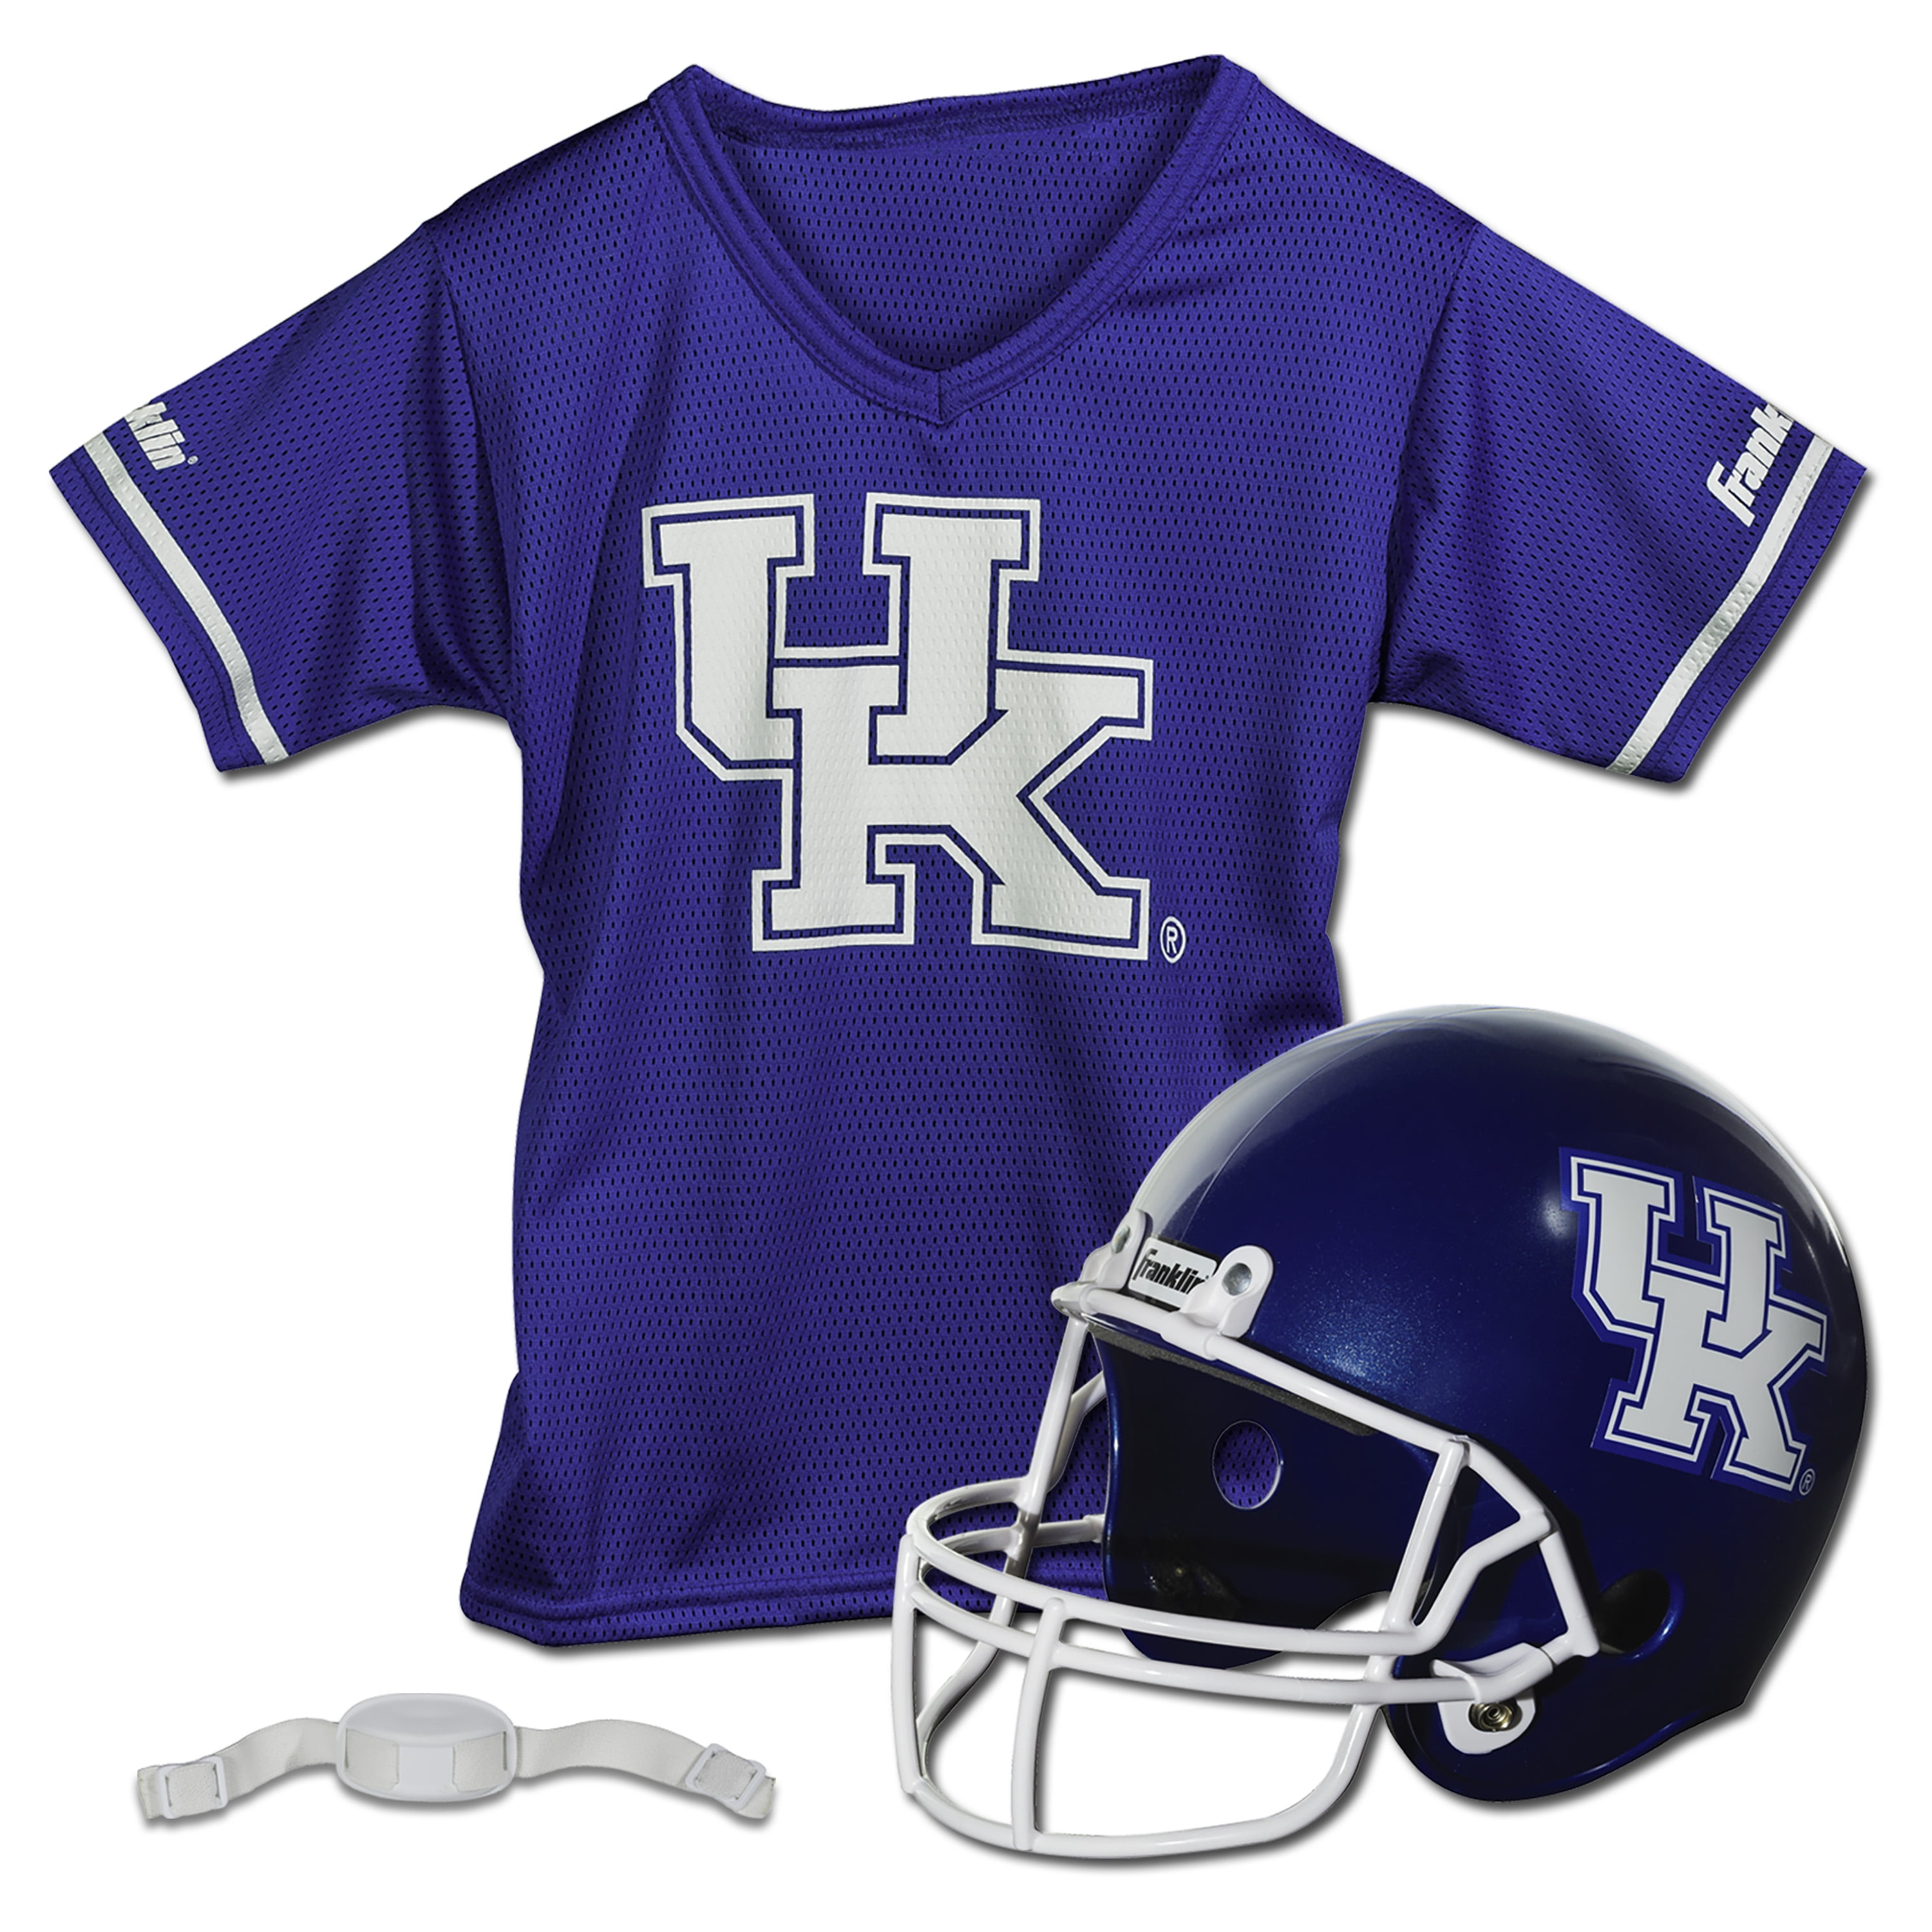 Univ. of Kentucky (Wildcats) Football Helmet Backpack NCAA 3D